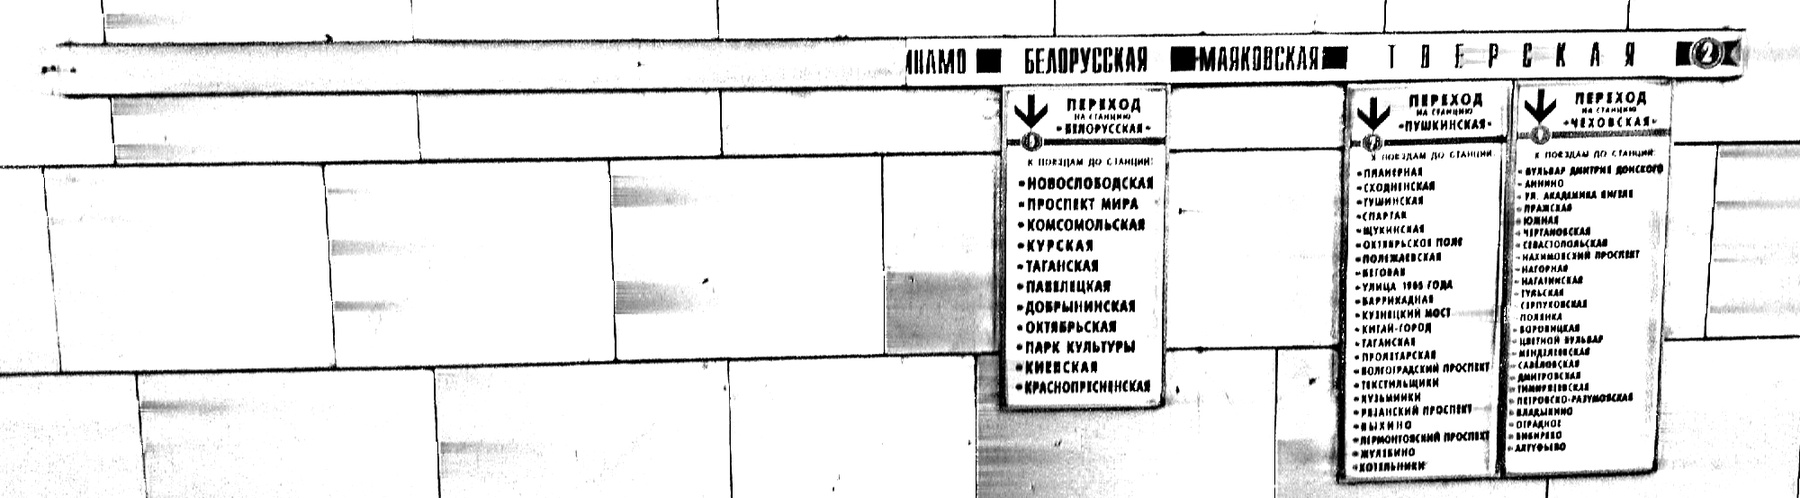 MetroArt метро подземка переход Москва город метрополитен план график маршрут пустота обрыв поездка станция